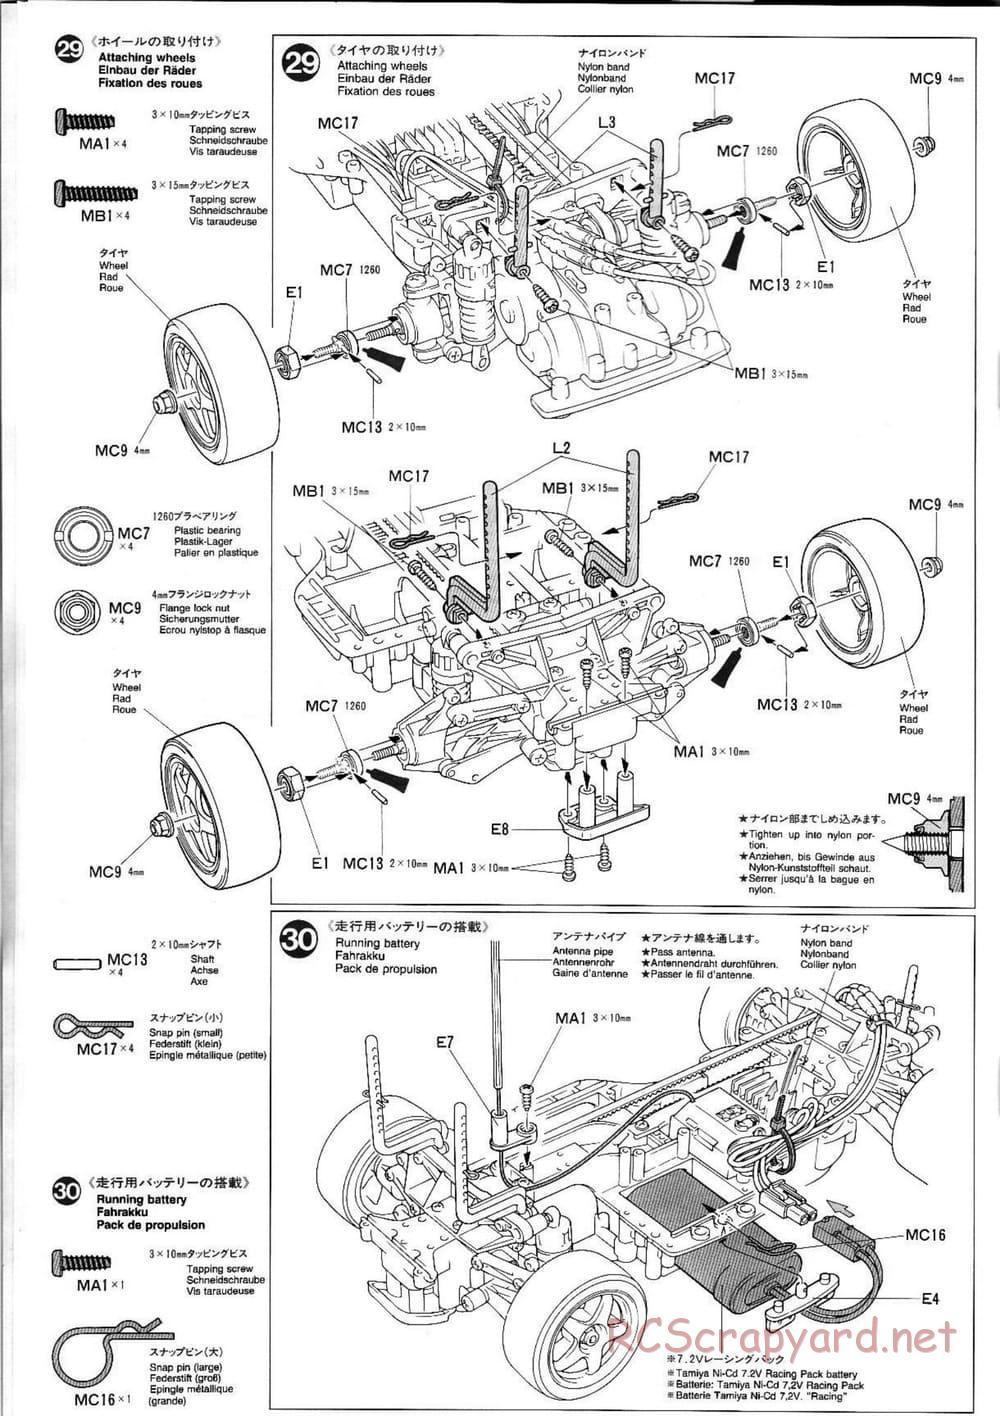 Tamiya - Mitsubishi Lancer Evolution V WRC - TA-03F Chassis - Manual - Page 16